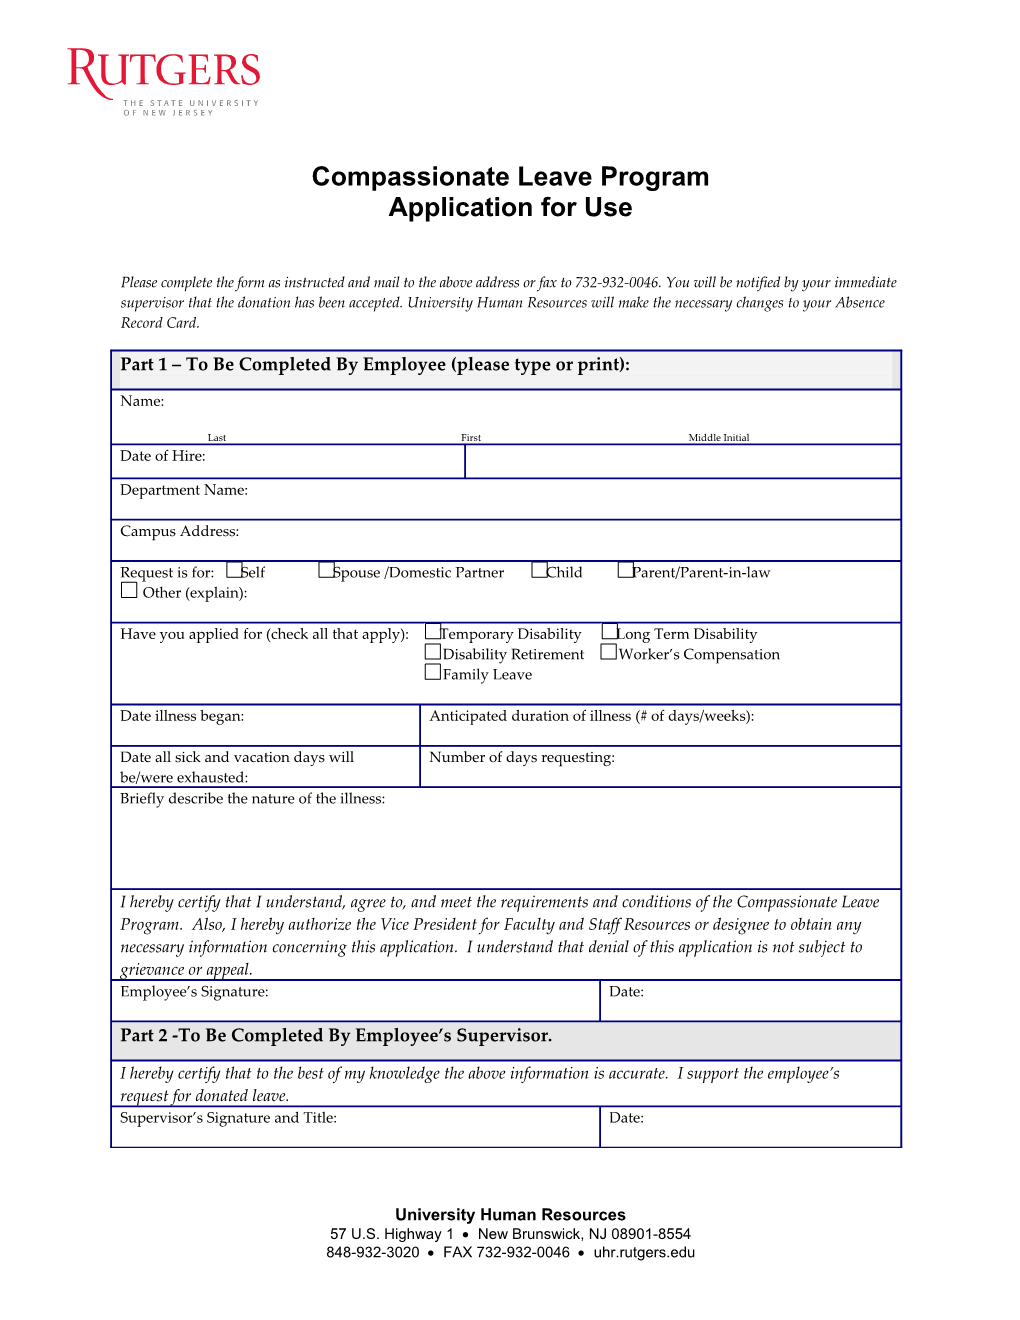 Compasionate Leave Program Application